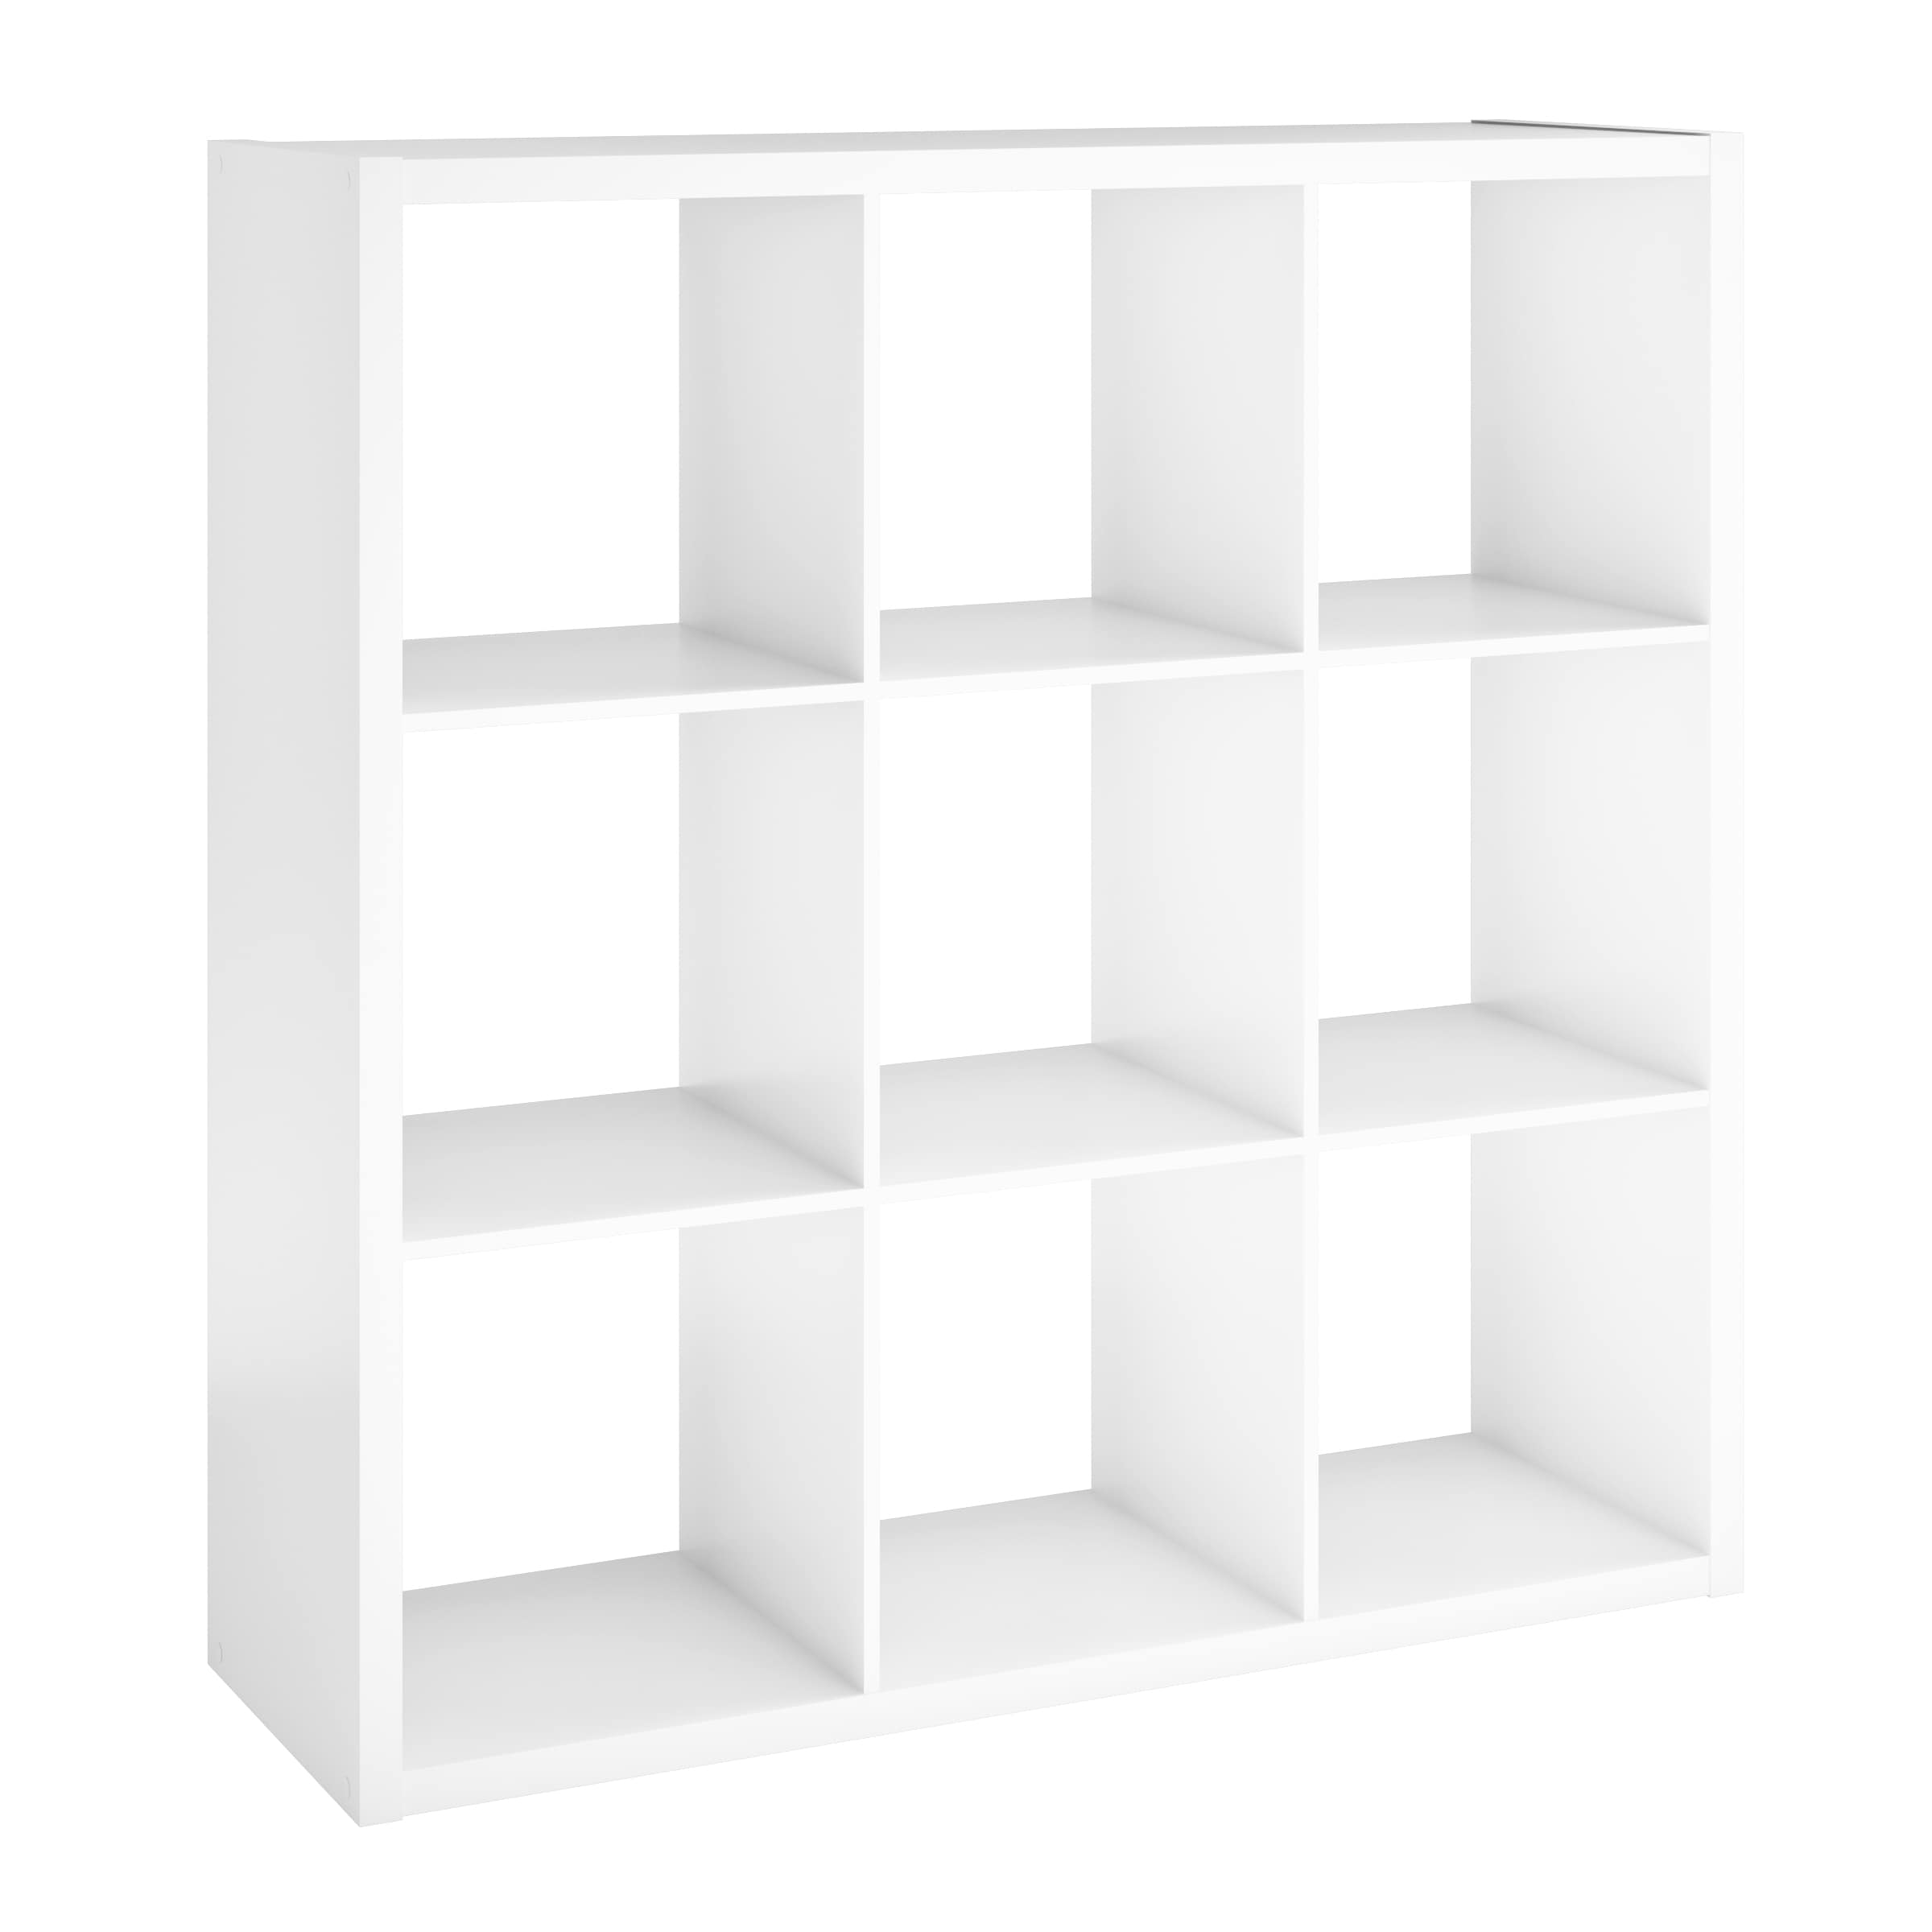 ClosetMaid White Laminate Storage Cubes Shelves Home Display Decorative New 